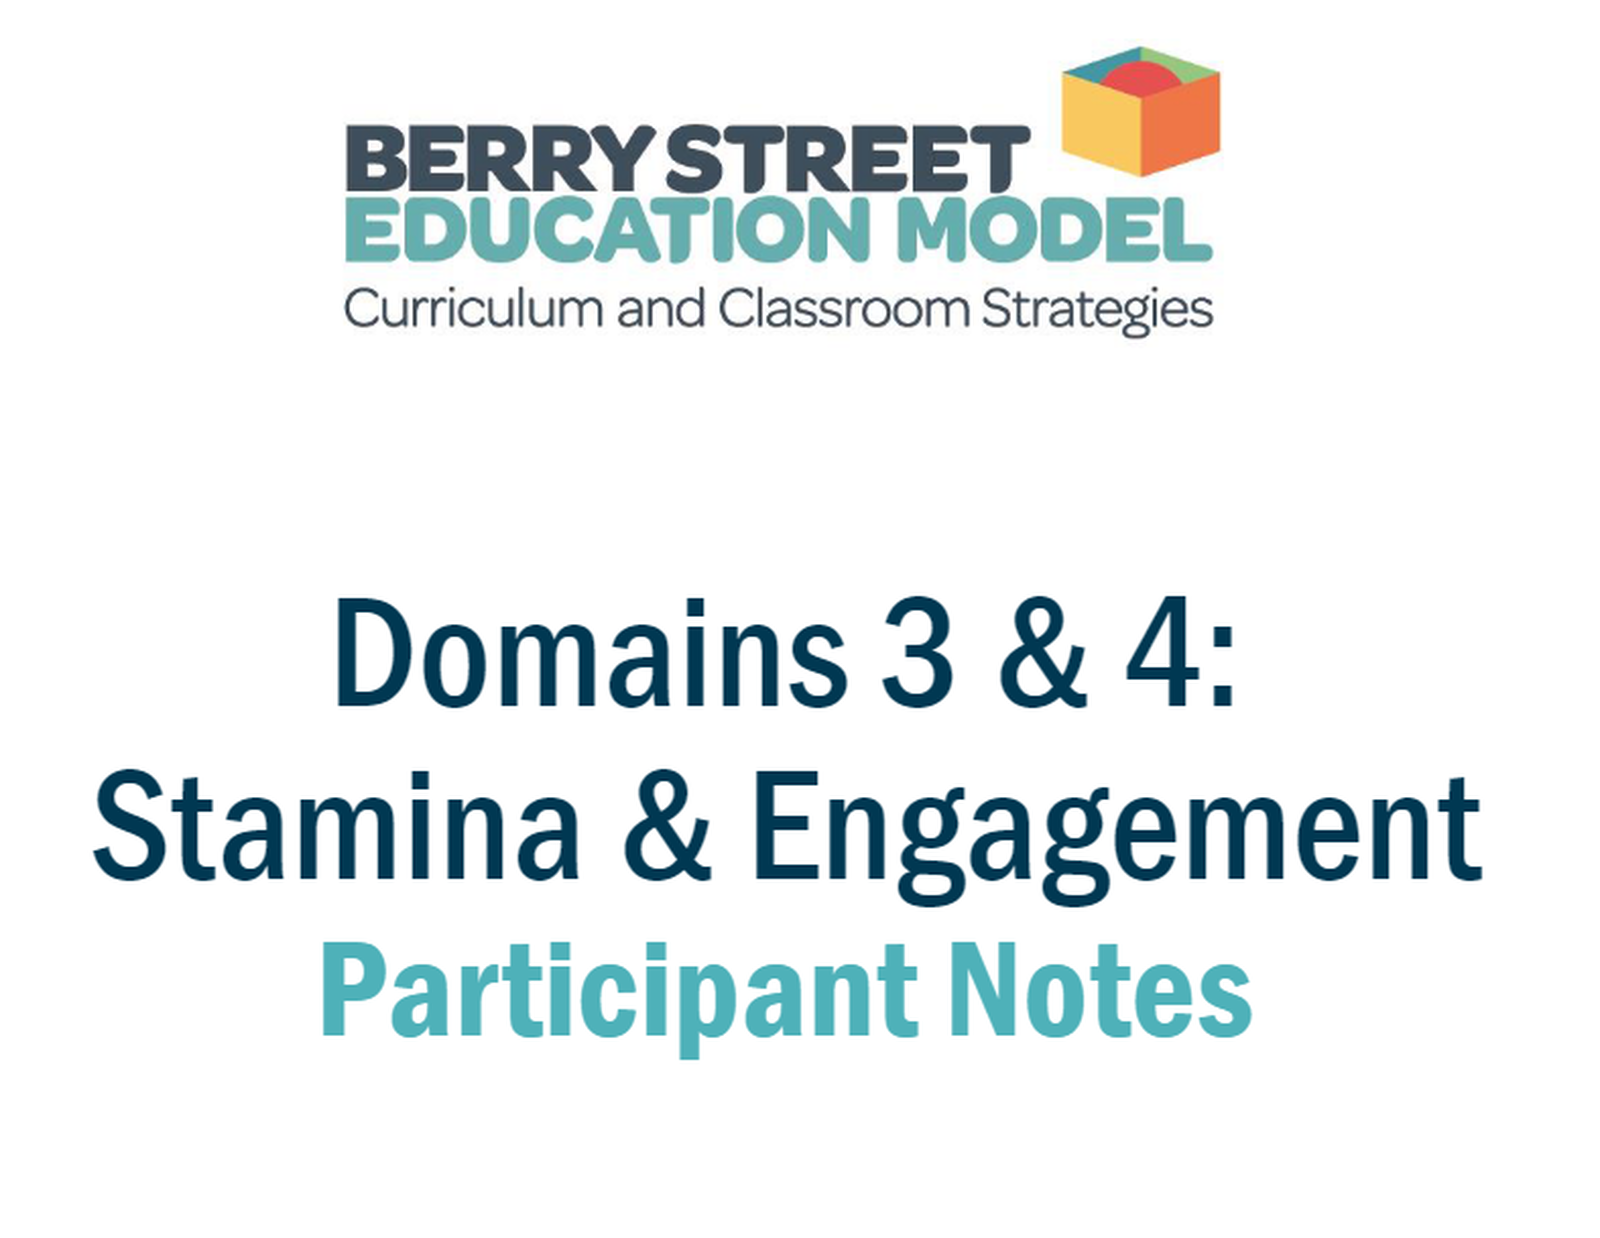 Stamina and engagament participant notes